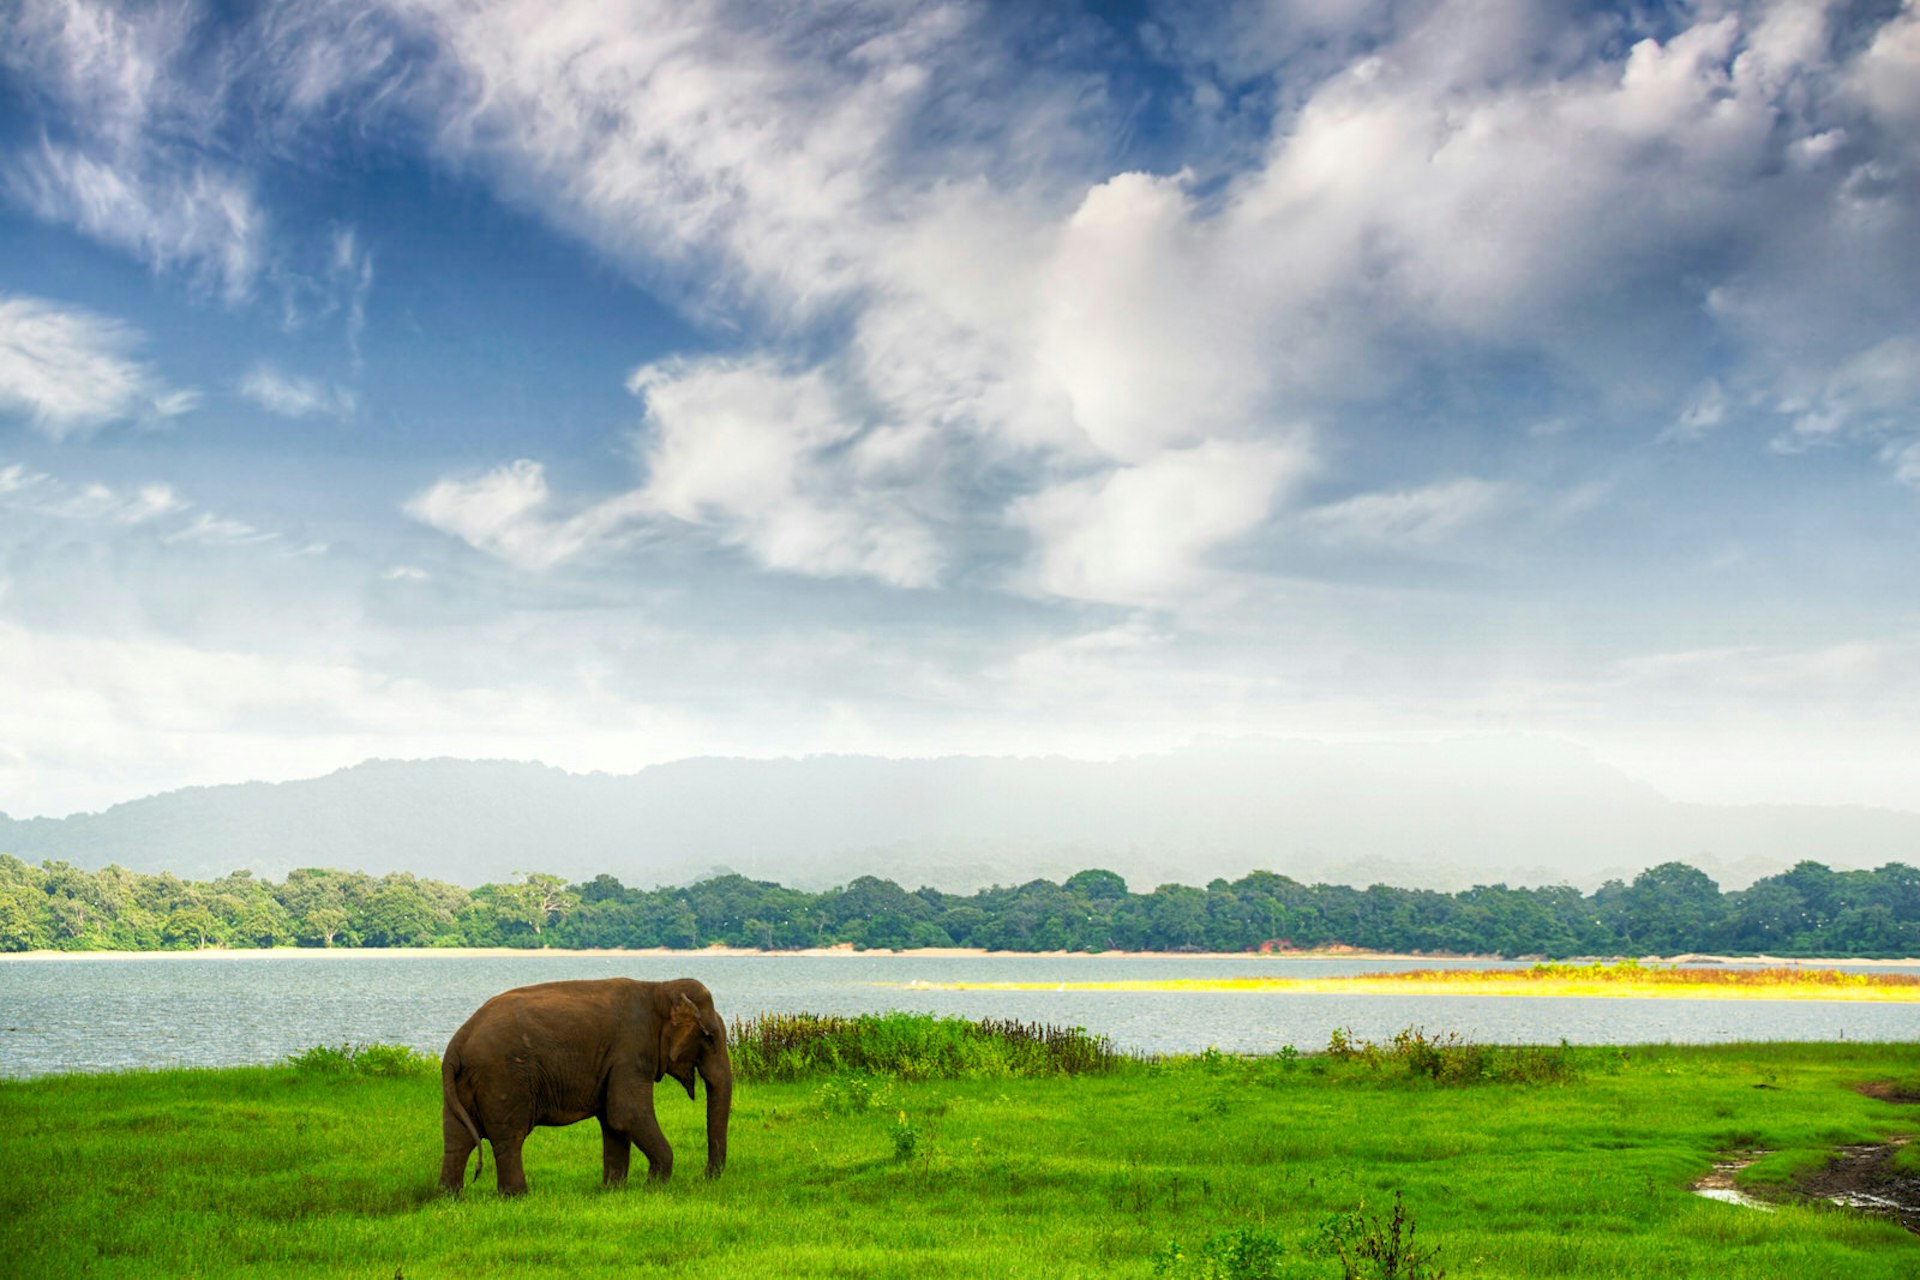 A lone elephant in Minneriya National Park